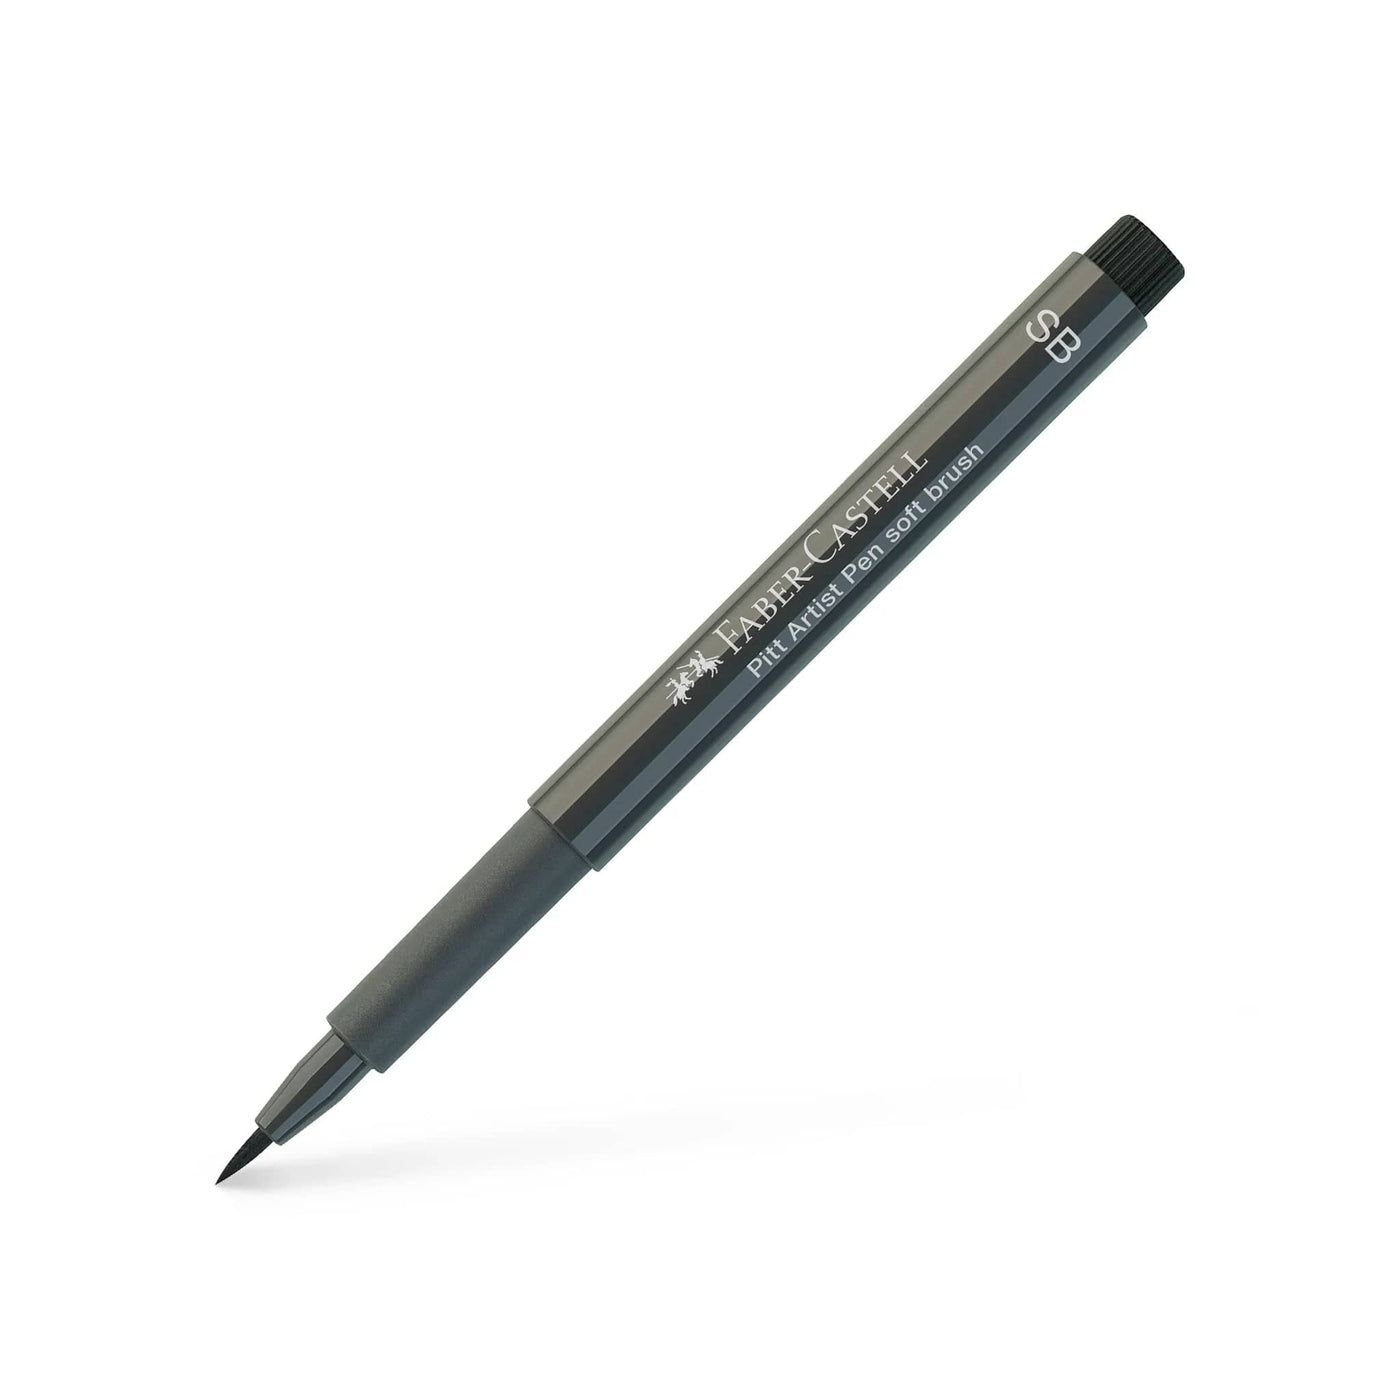 Soft Brush Pitt Artist Pen from Faber Castell - 274 Warm Grey V